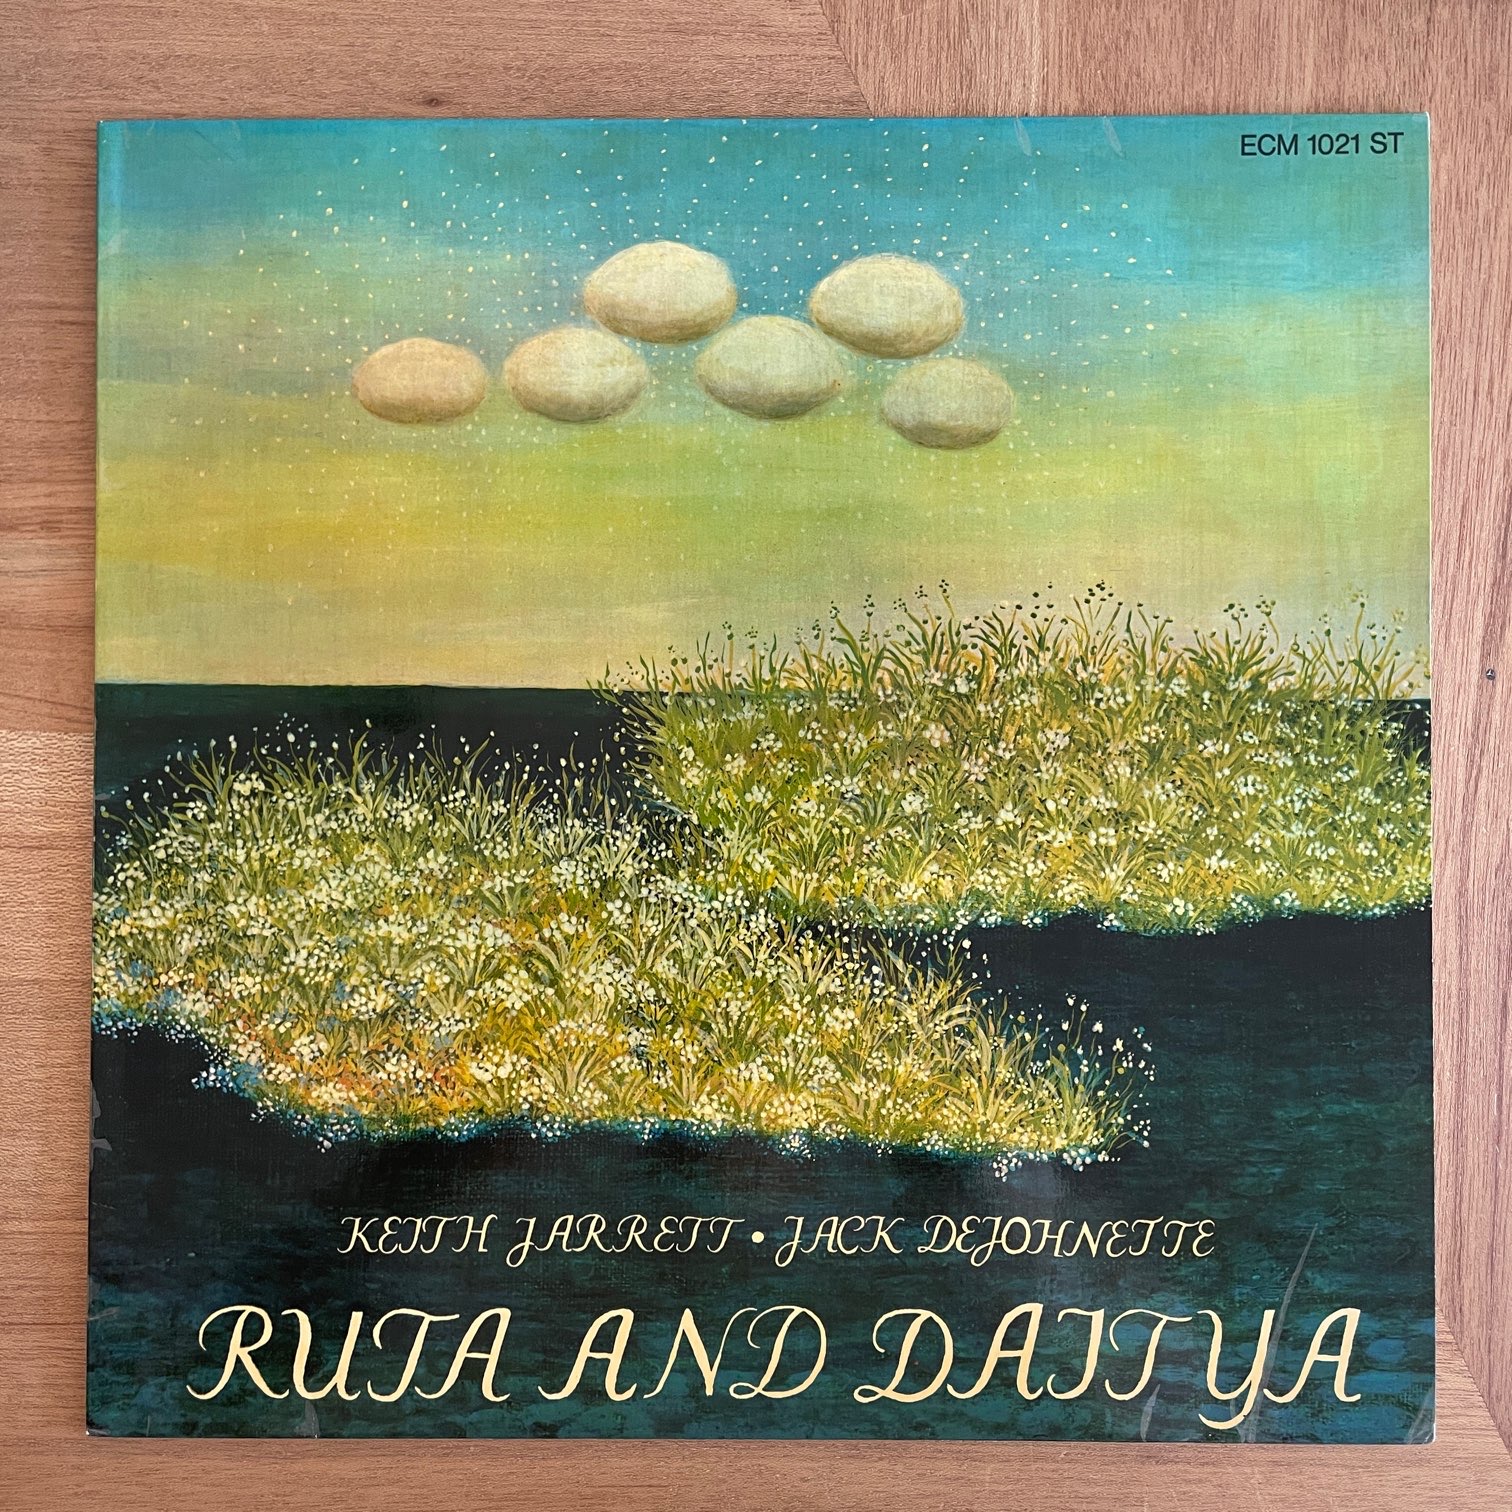 KEITH JARRETT / RUTA AND DAITYA | www.sia-sy.net